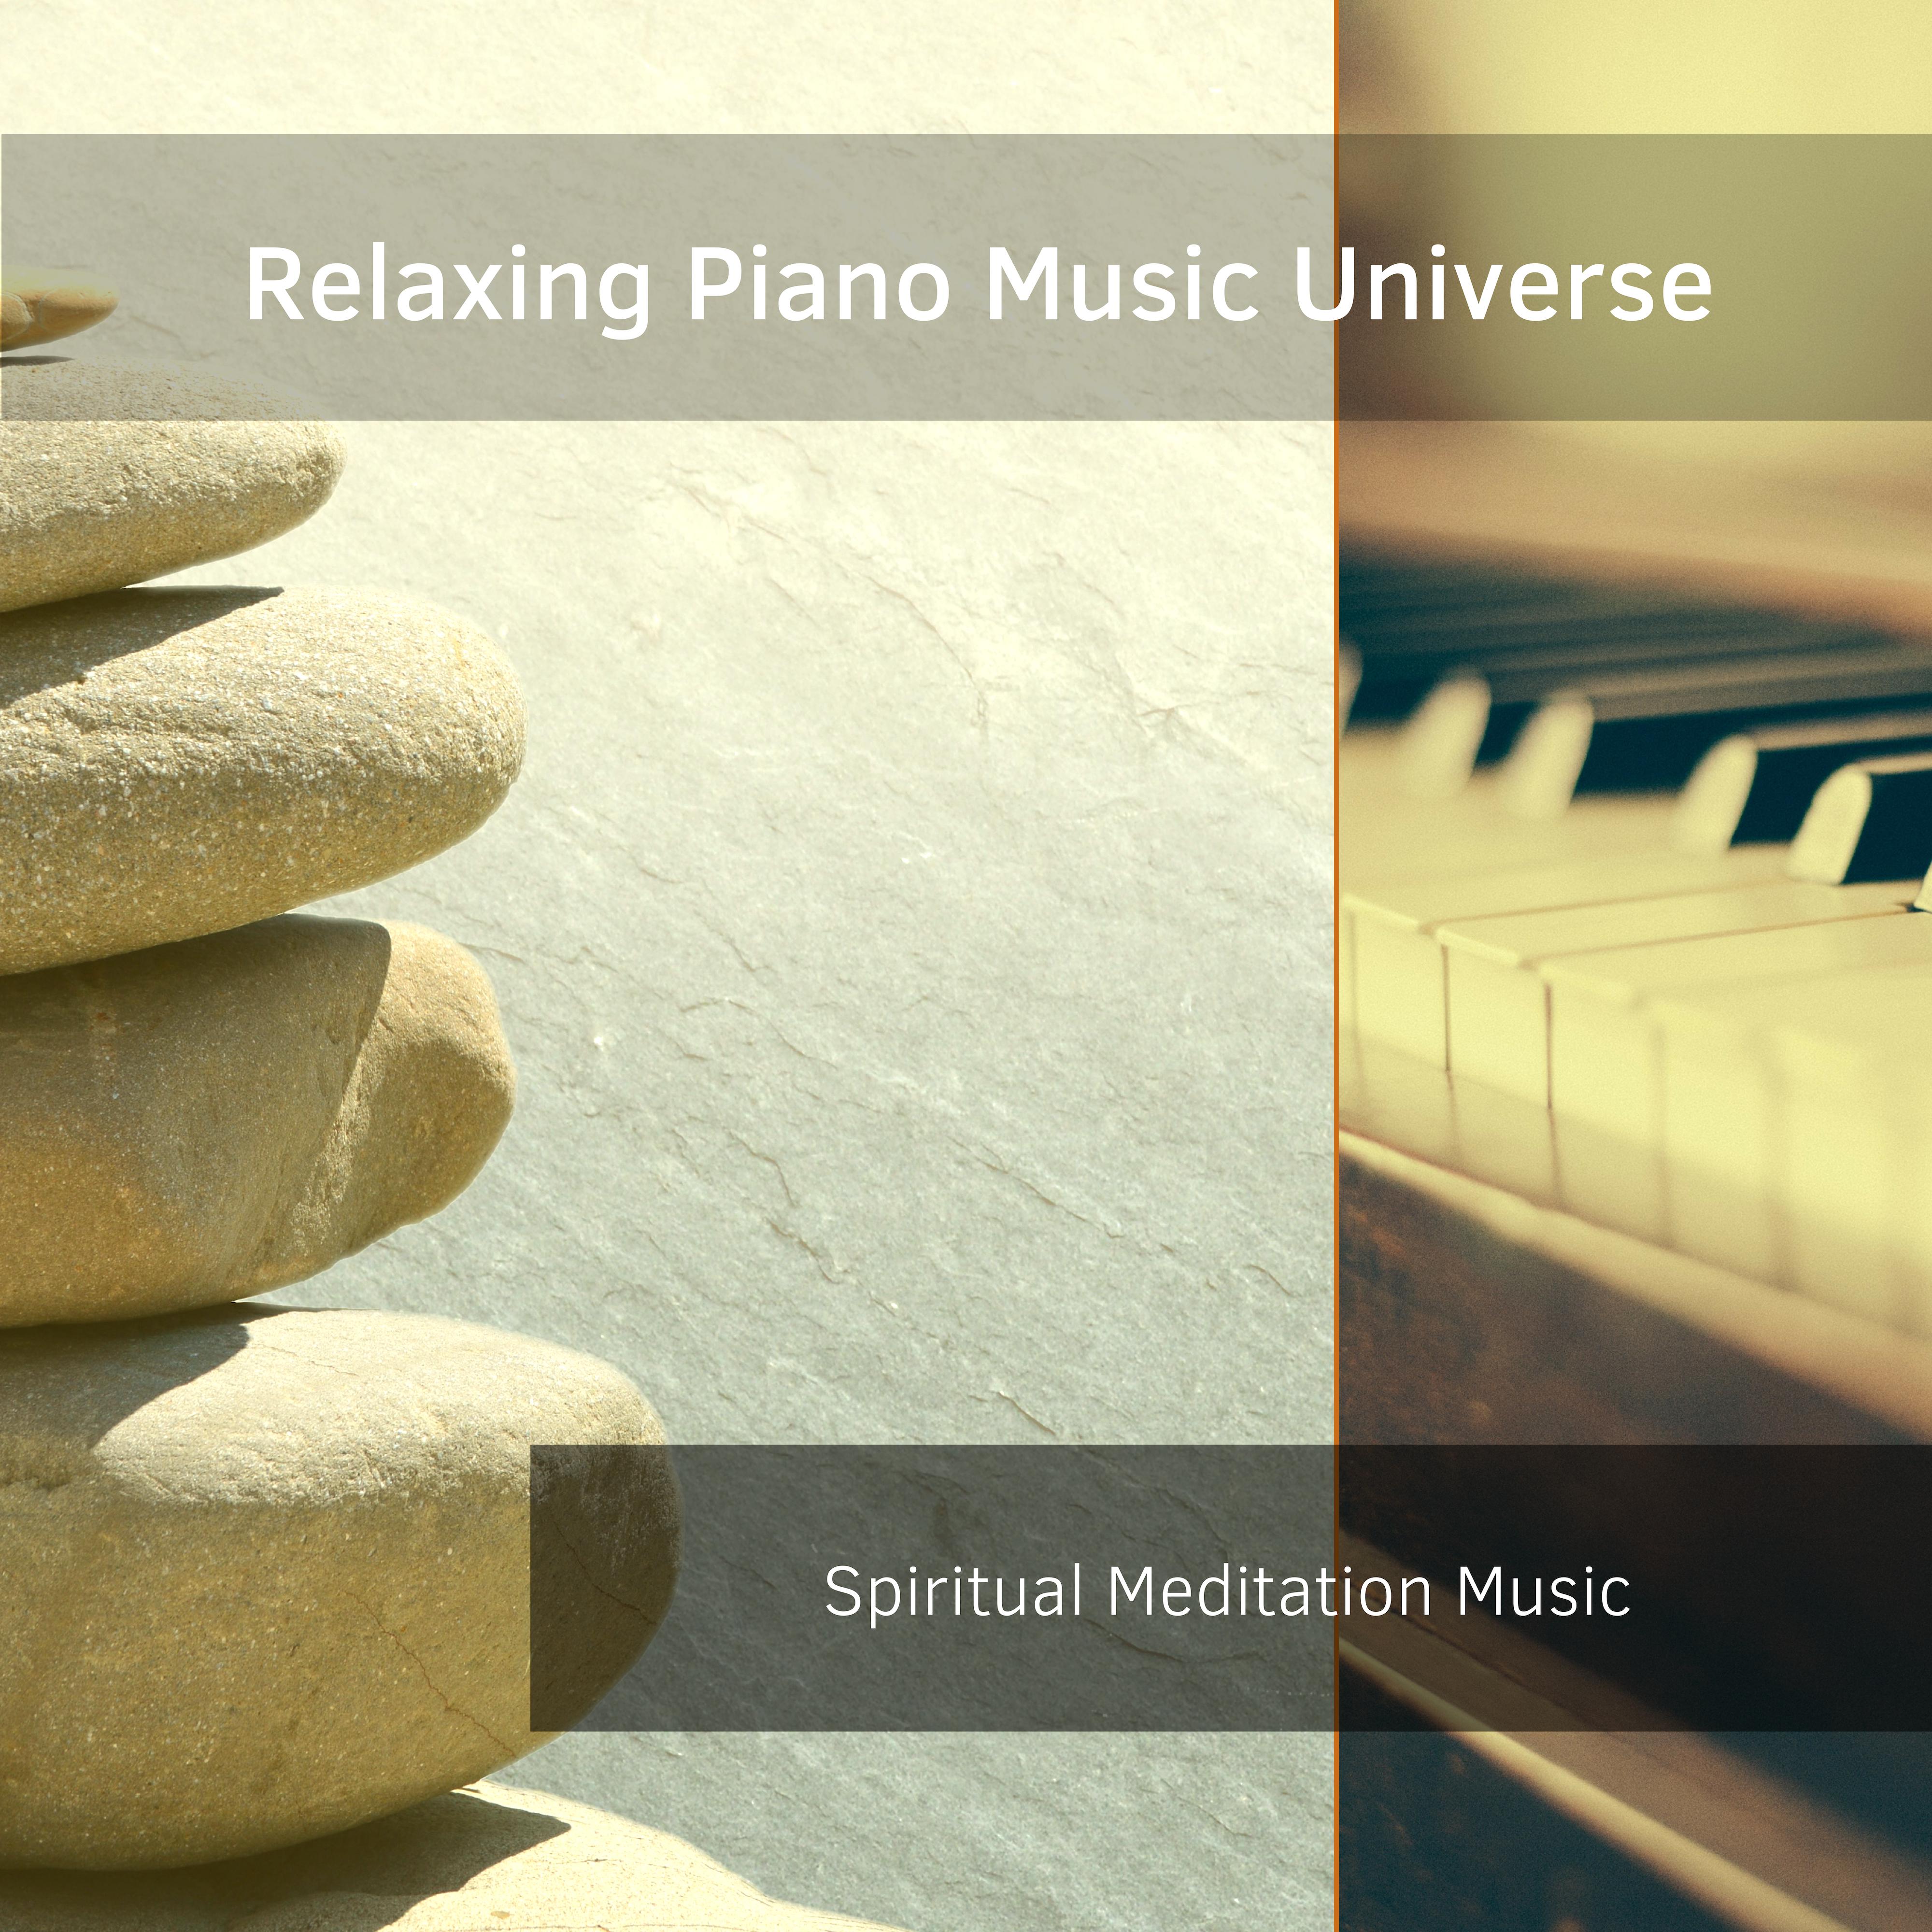 World Class Background Music for Calm Spiritual Meditation